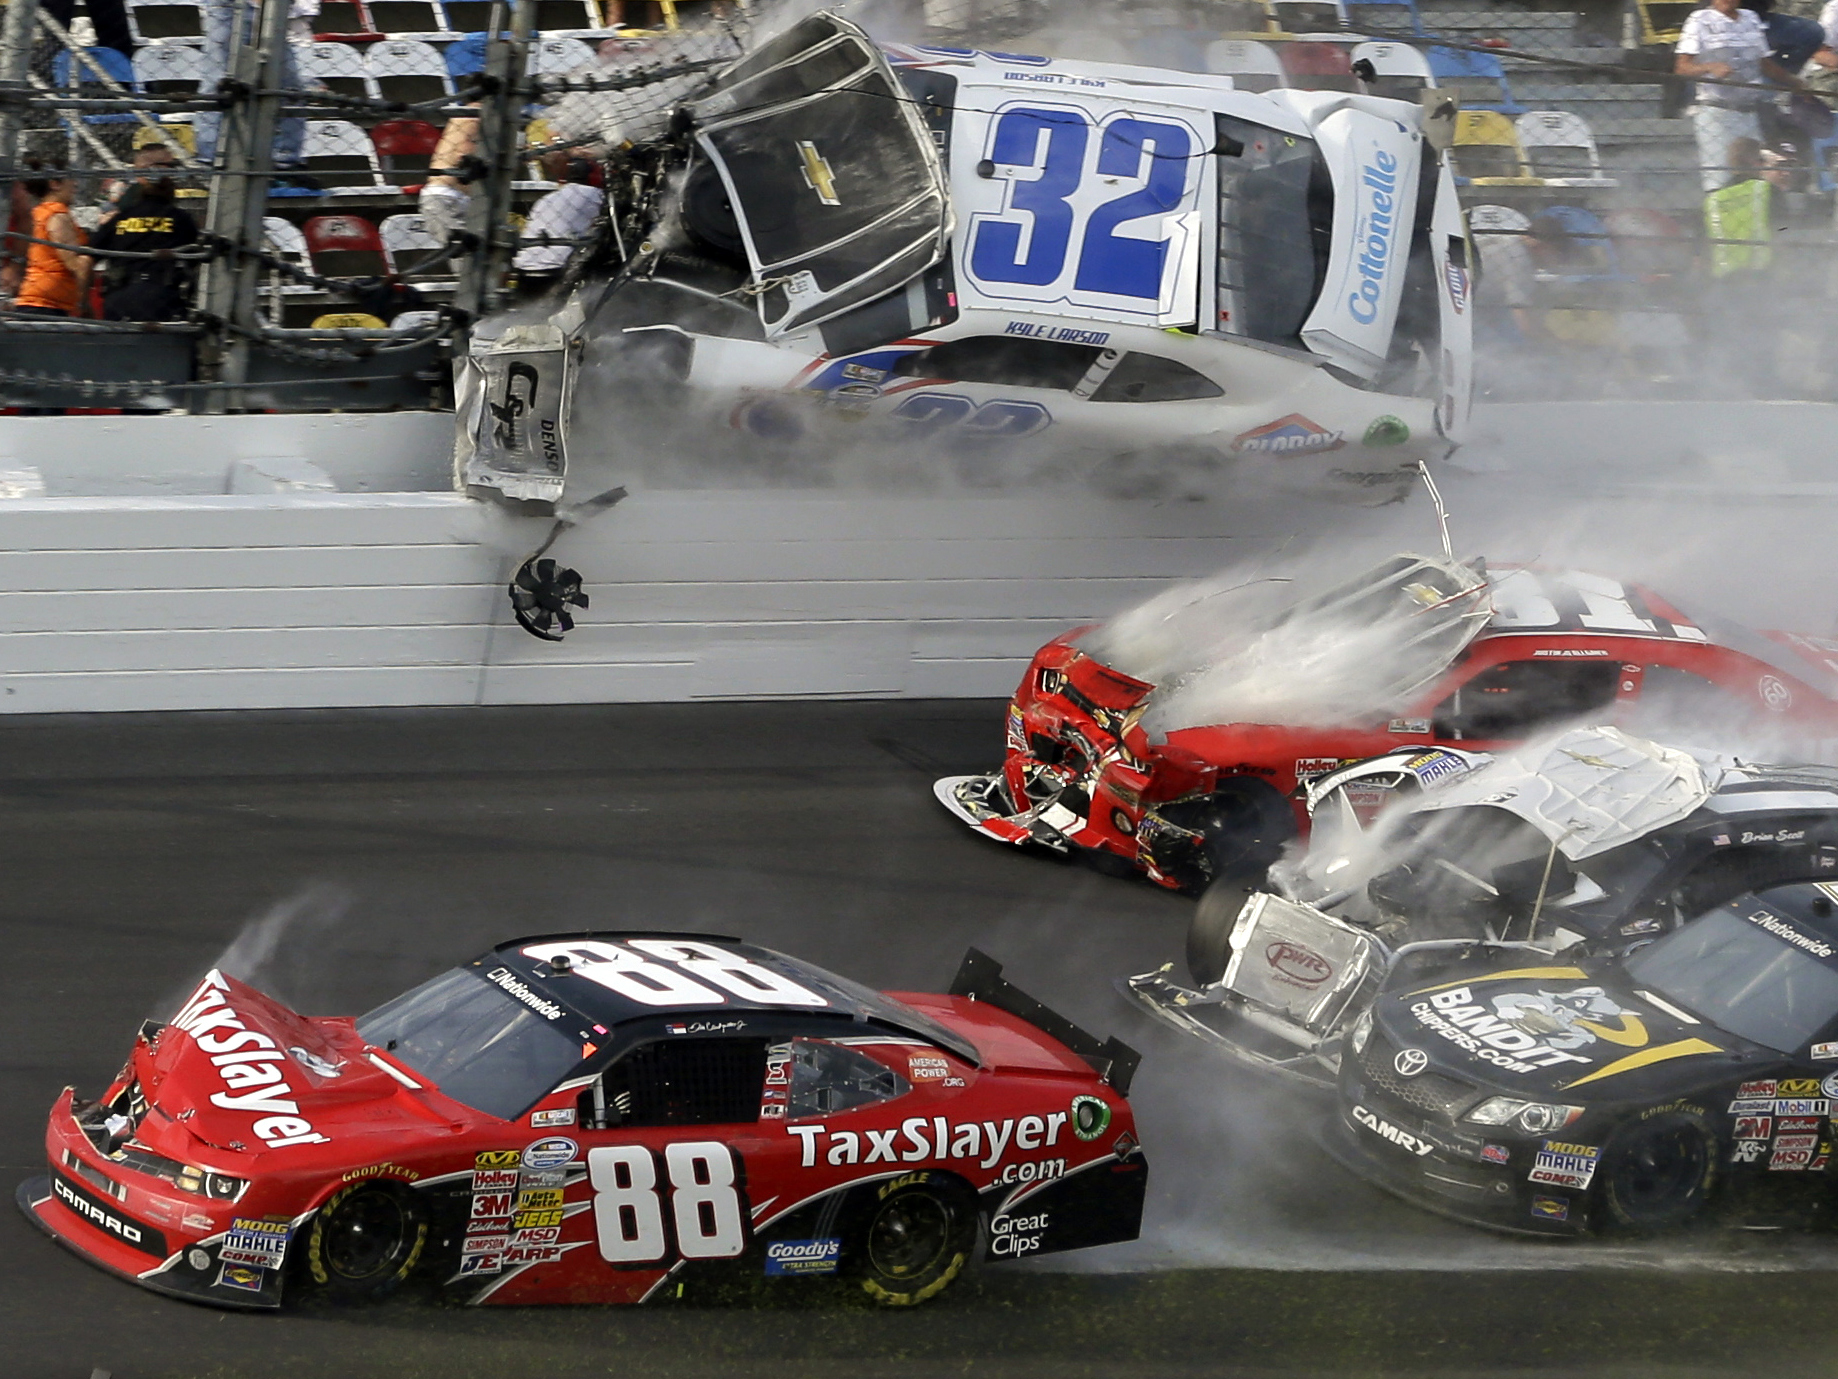 Daytona crash sends car parts flying, injuring fans